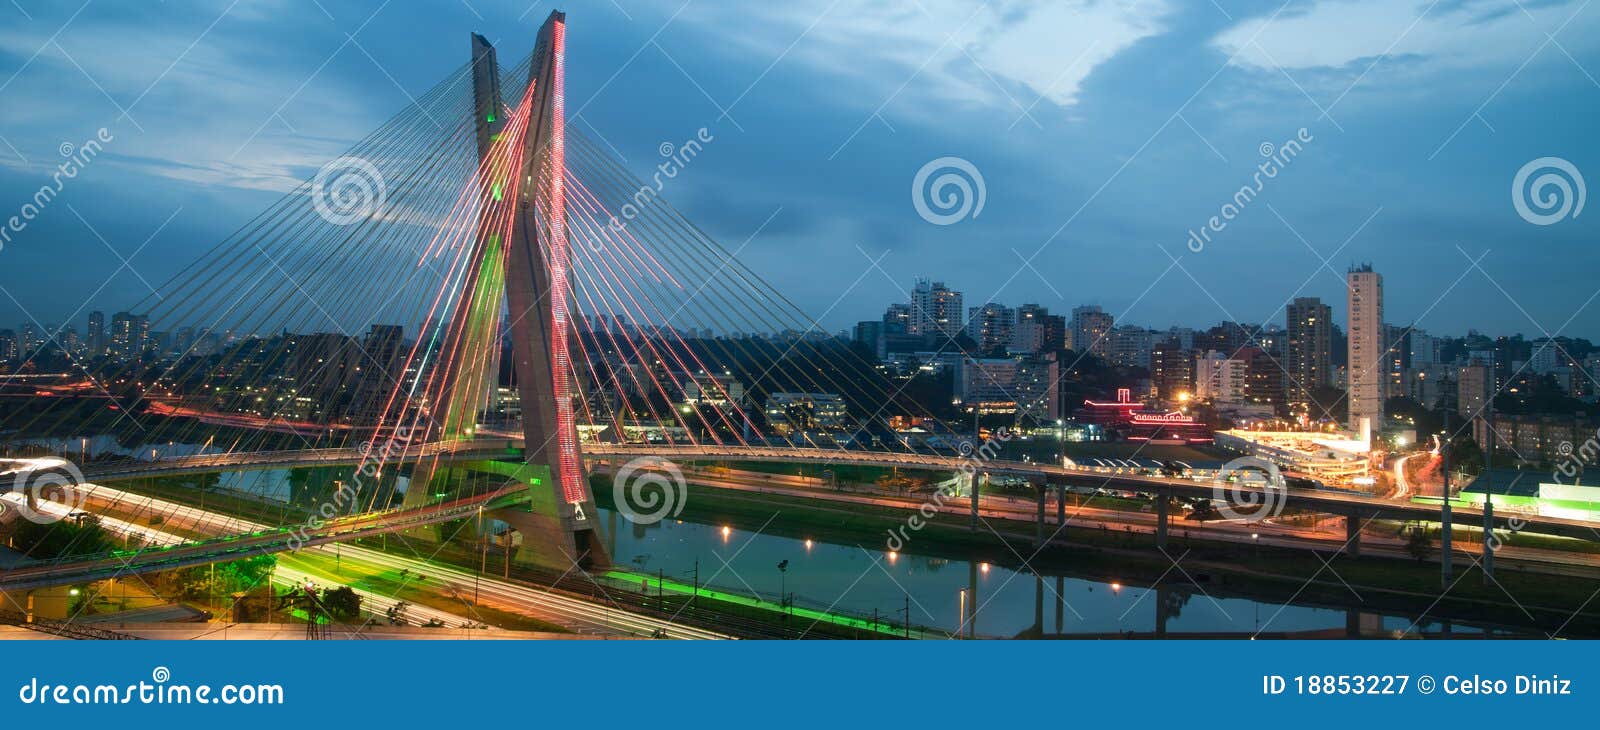 sao paulo city bridge at night